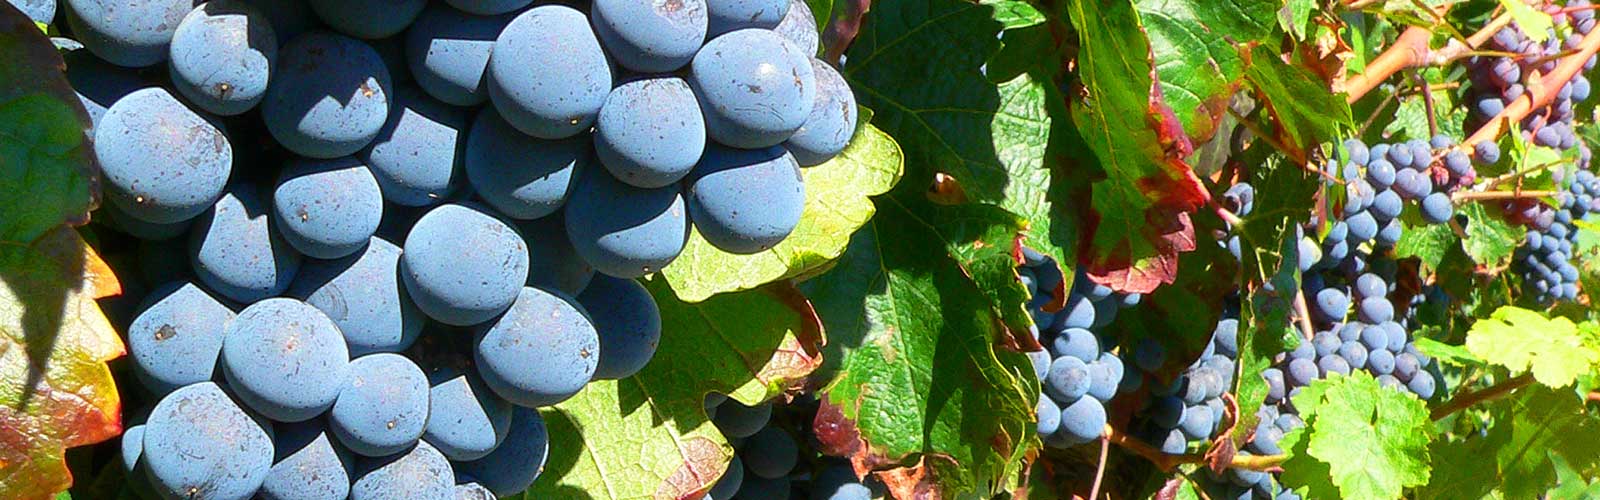 vineyard-grapes-wide